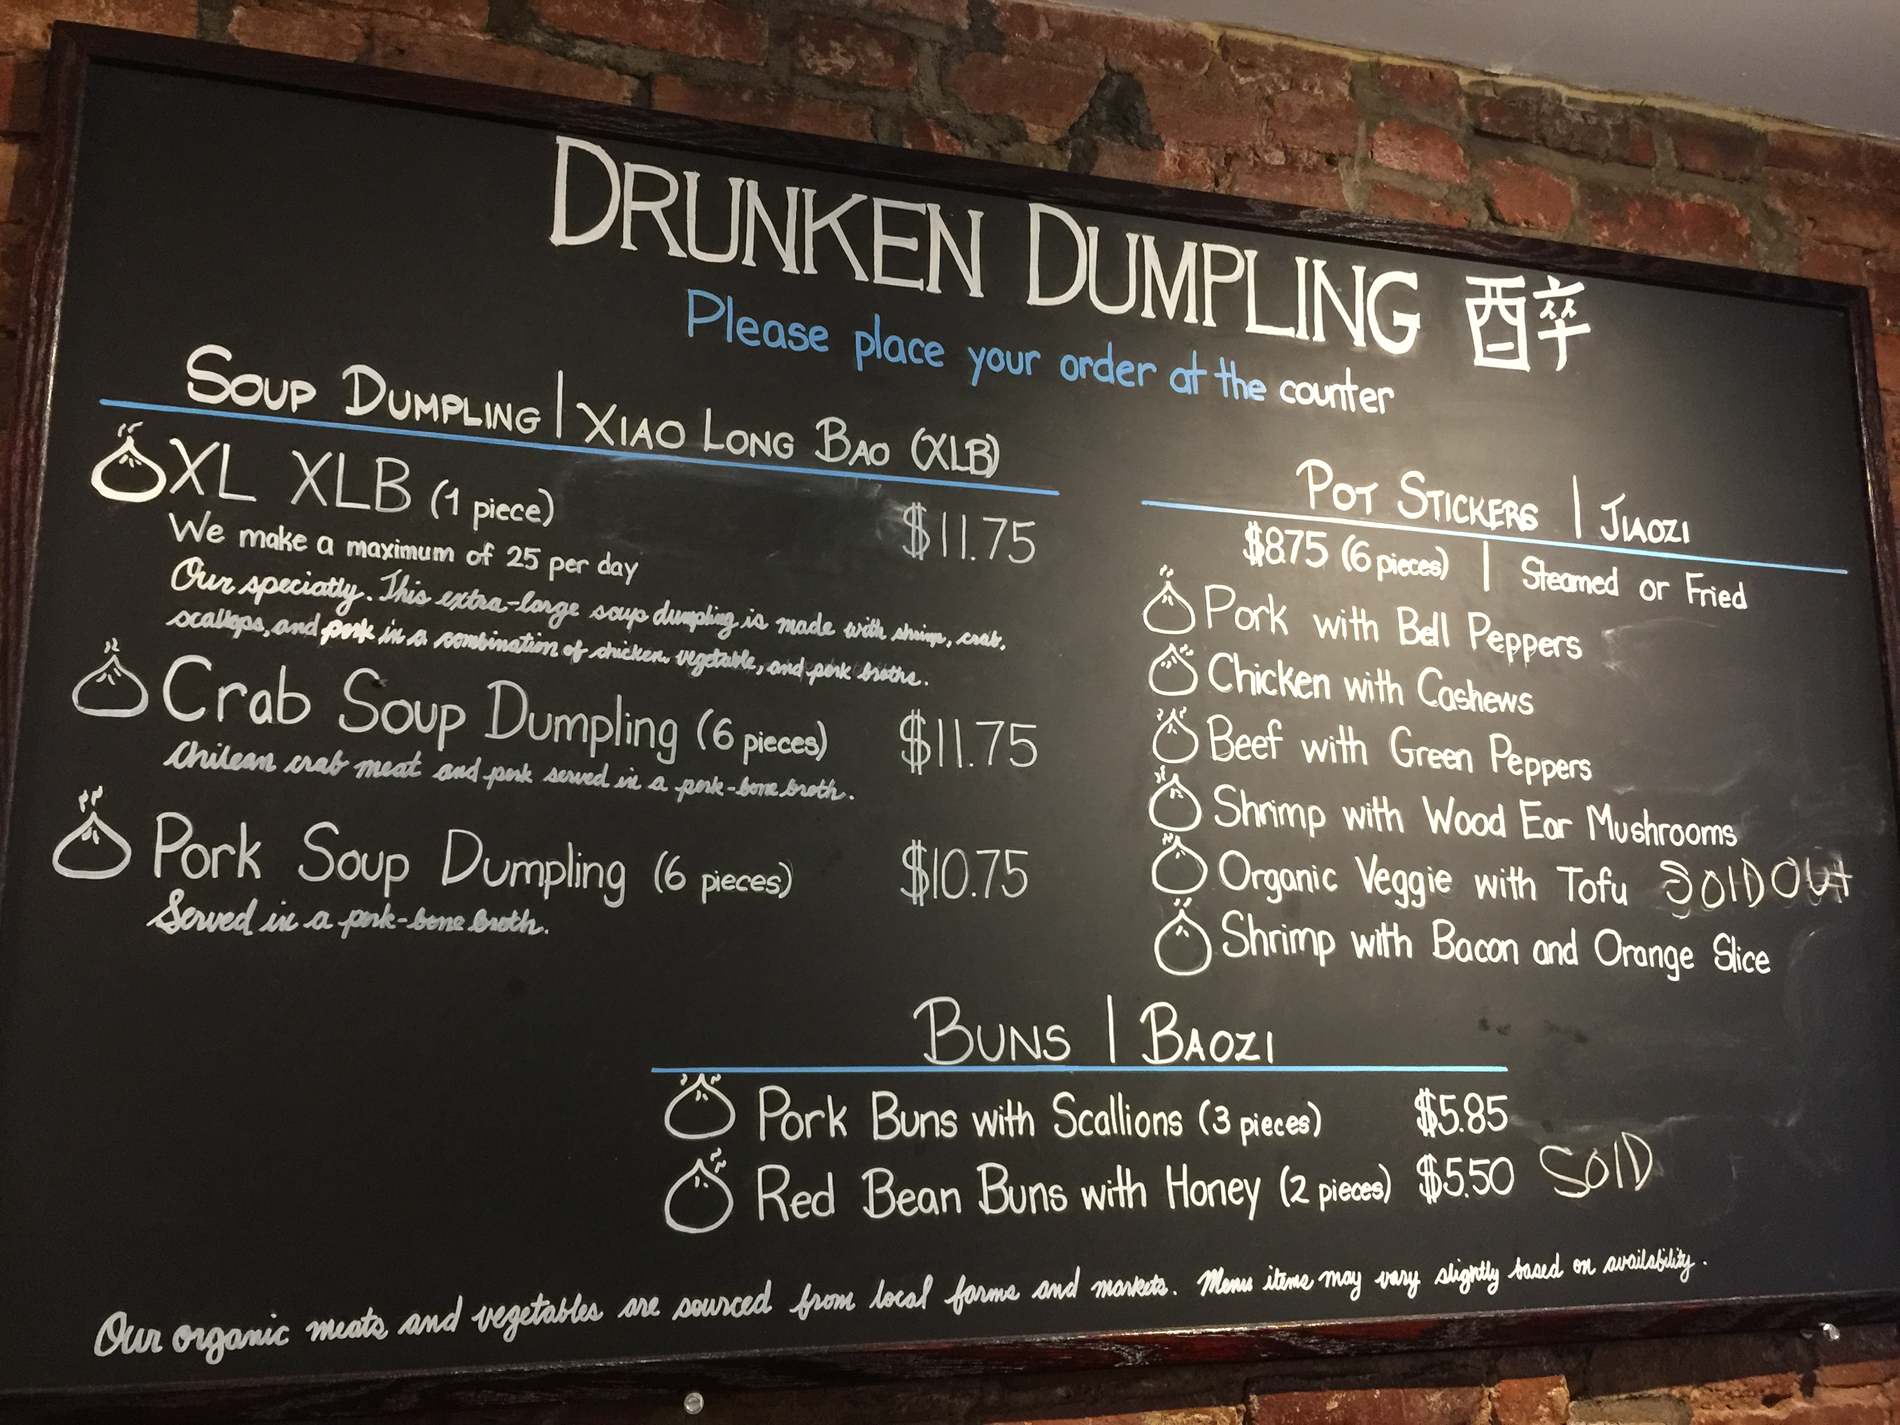 The menu at Drunken Dumpling